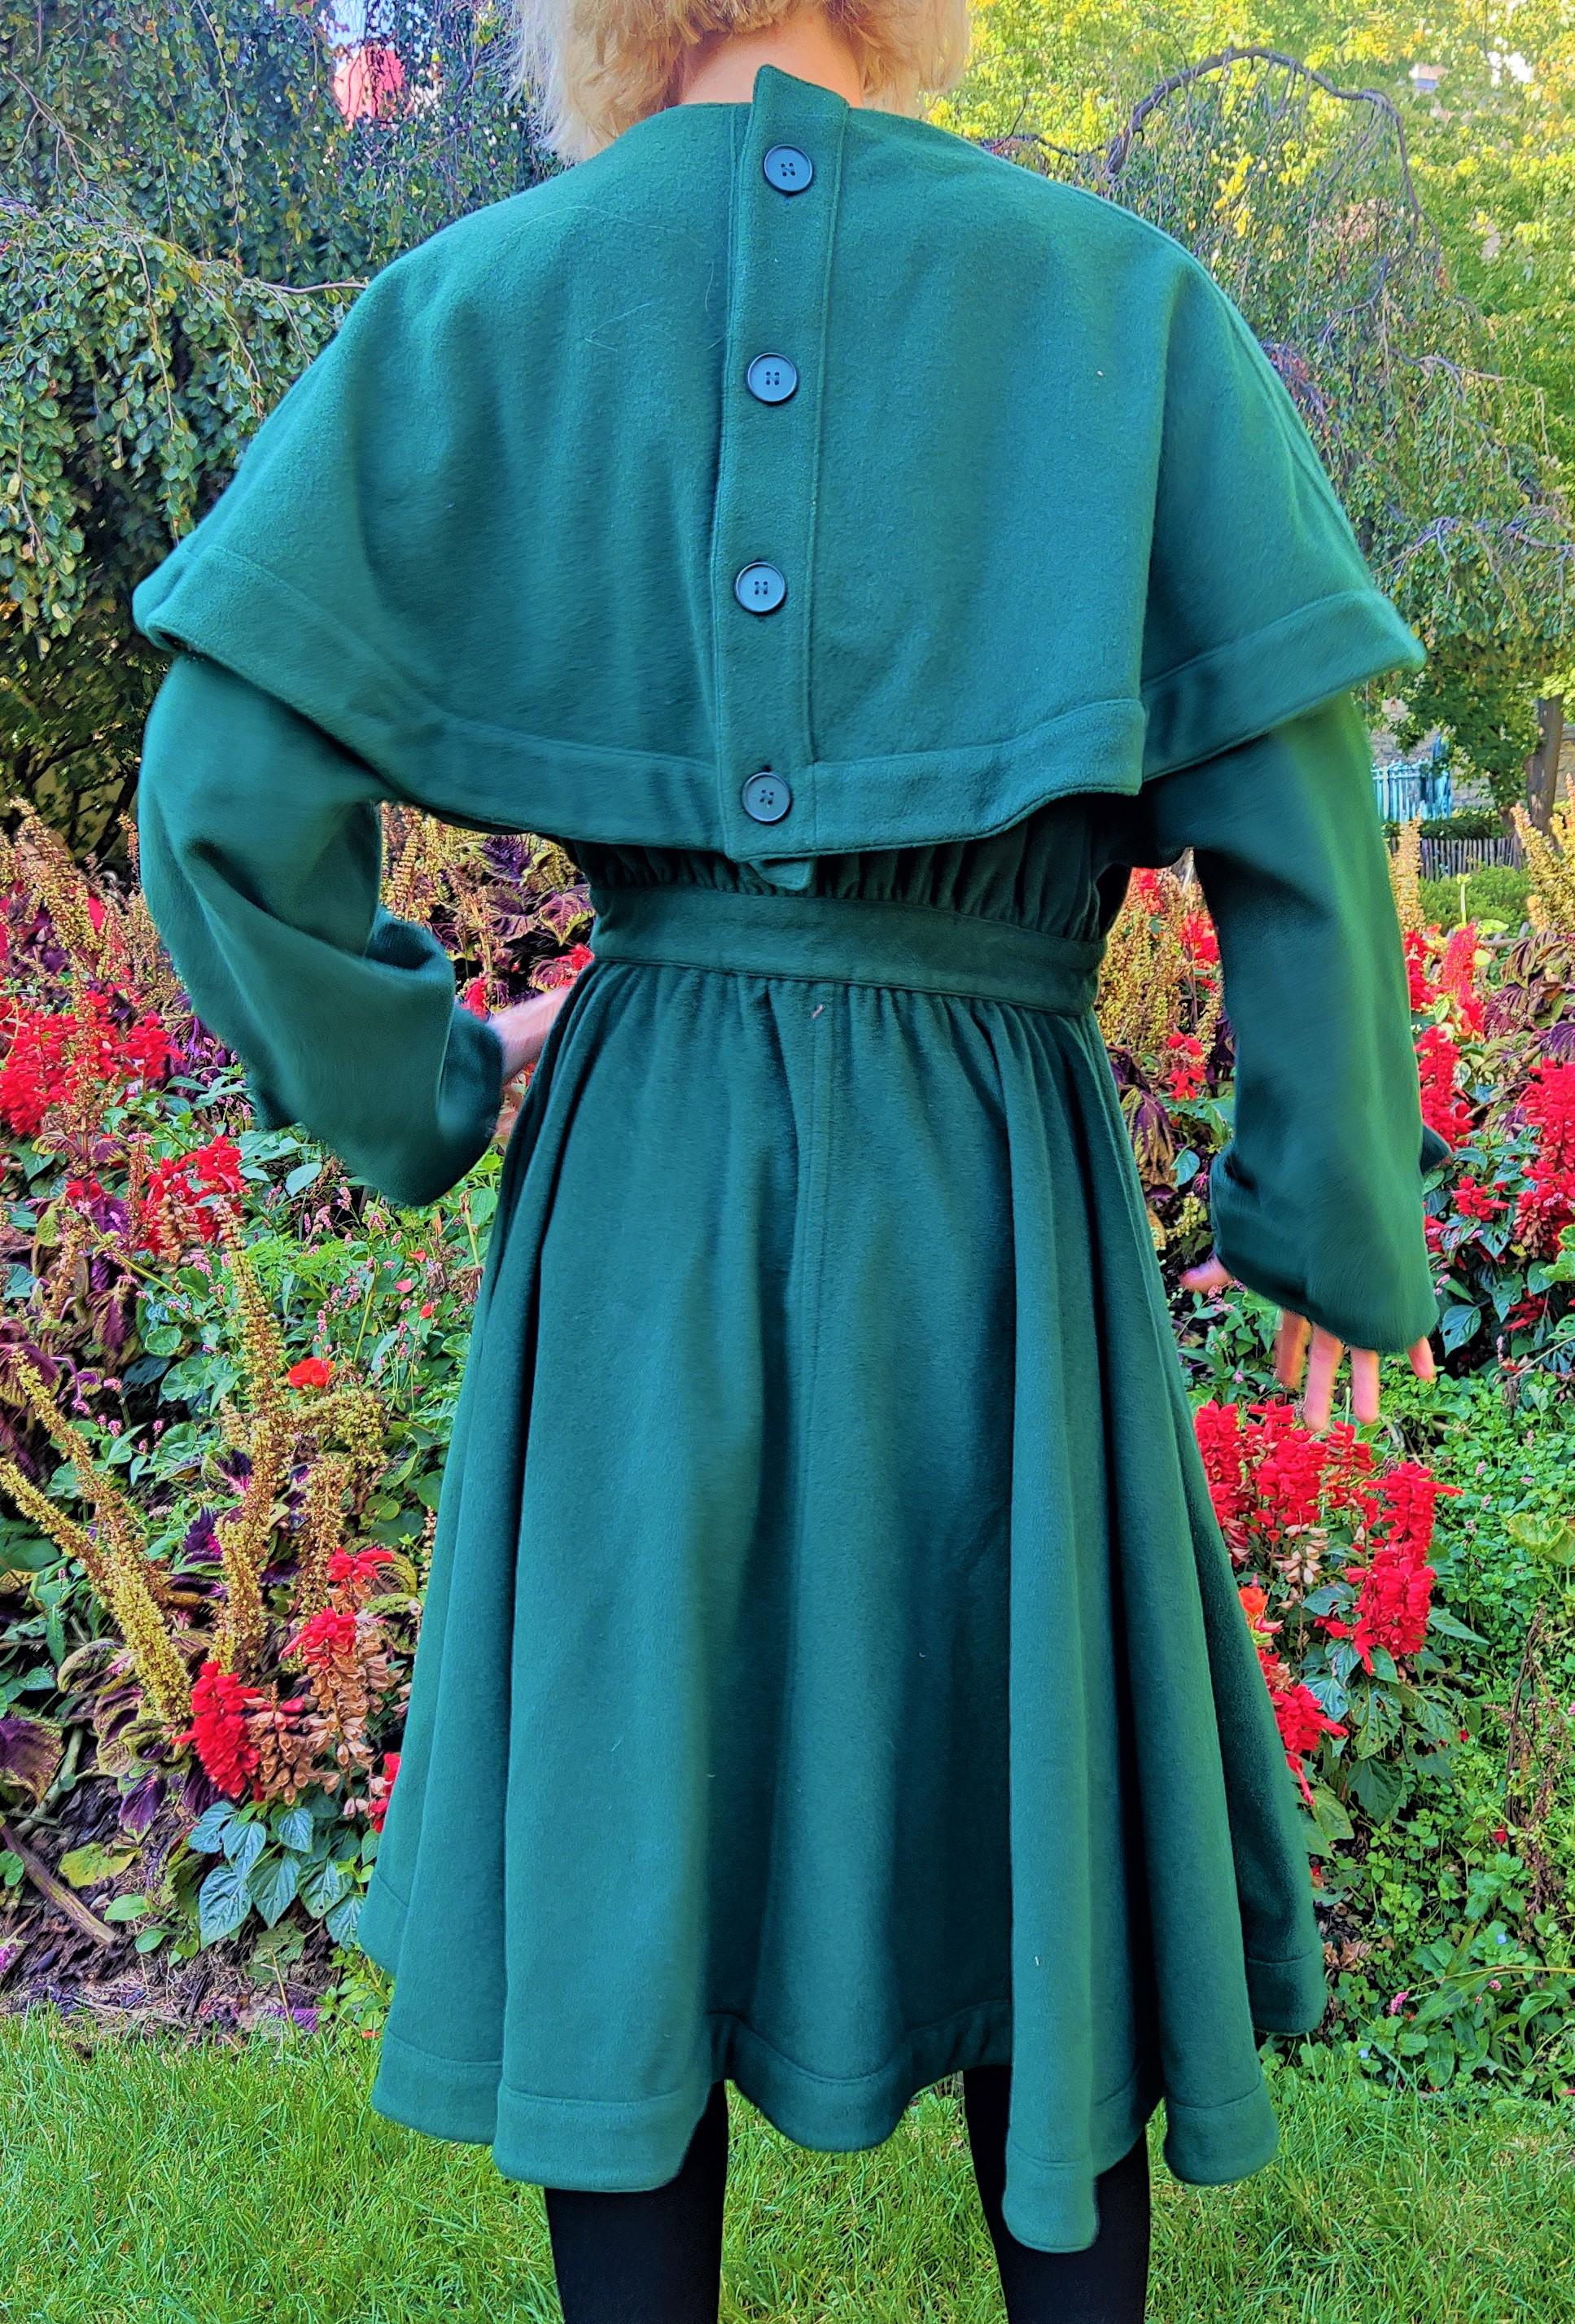 Balenciaga Evening Ball Gown Wool Cashmere Wasp Waist 80s Green Jacket Coat 1